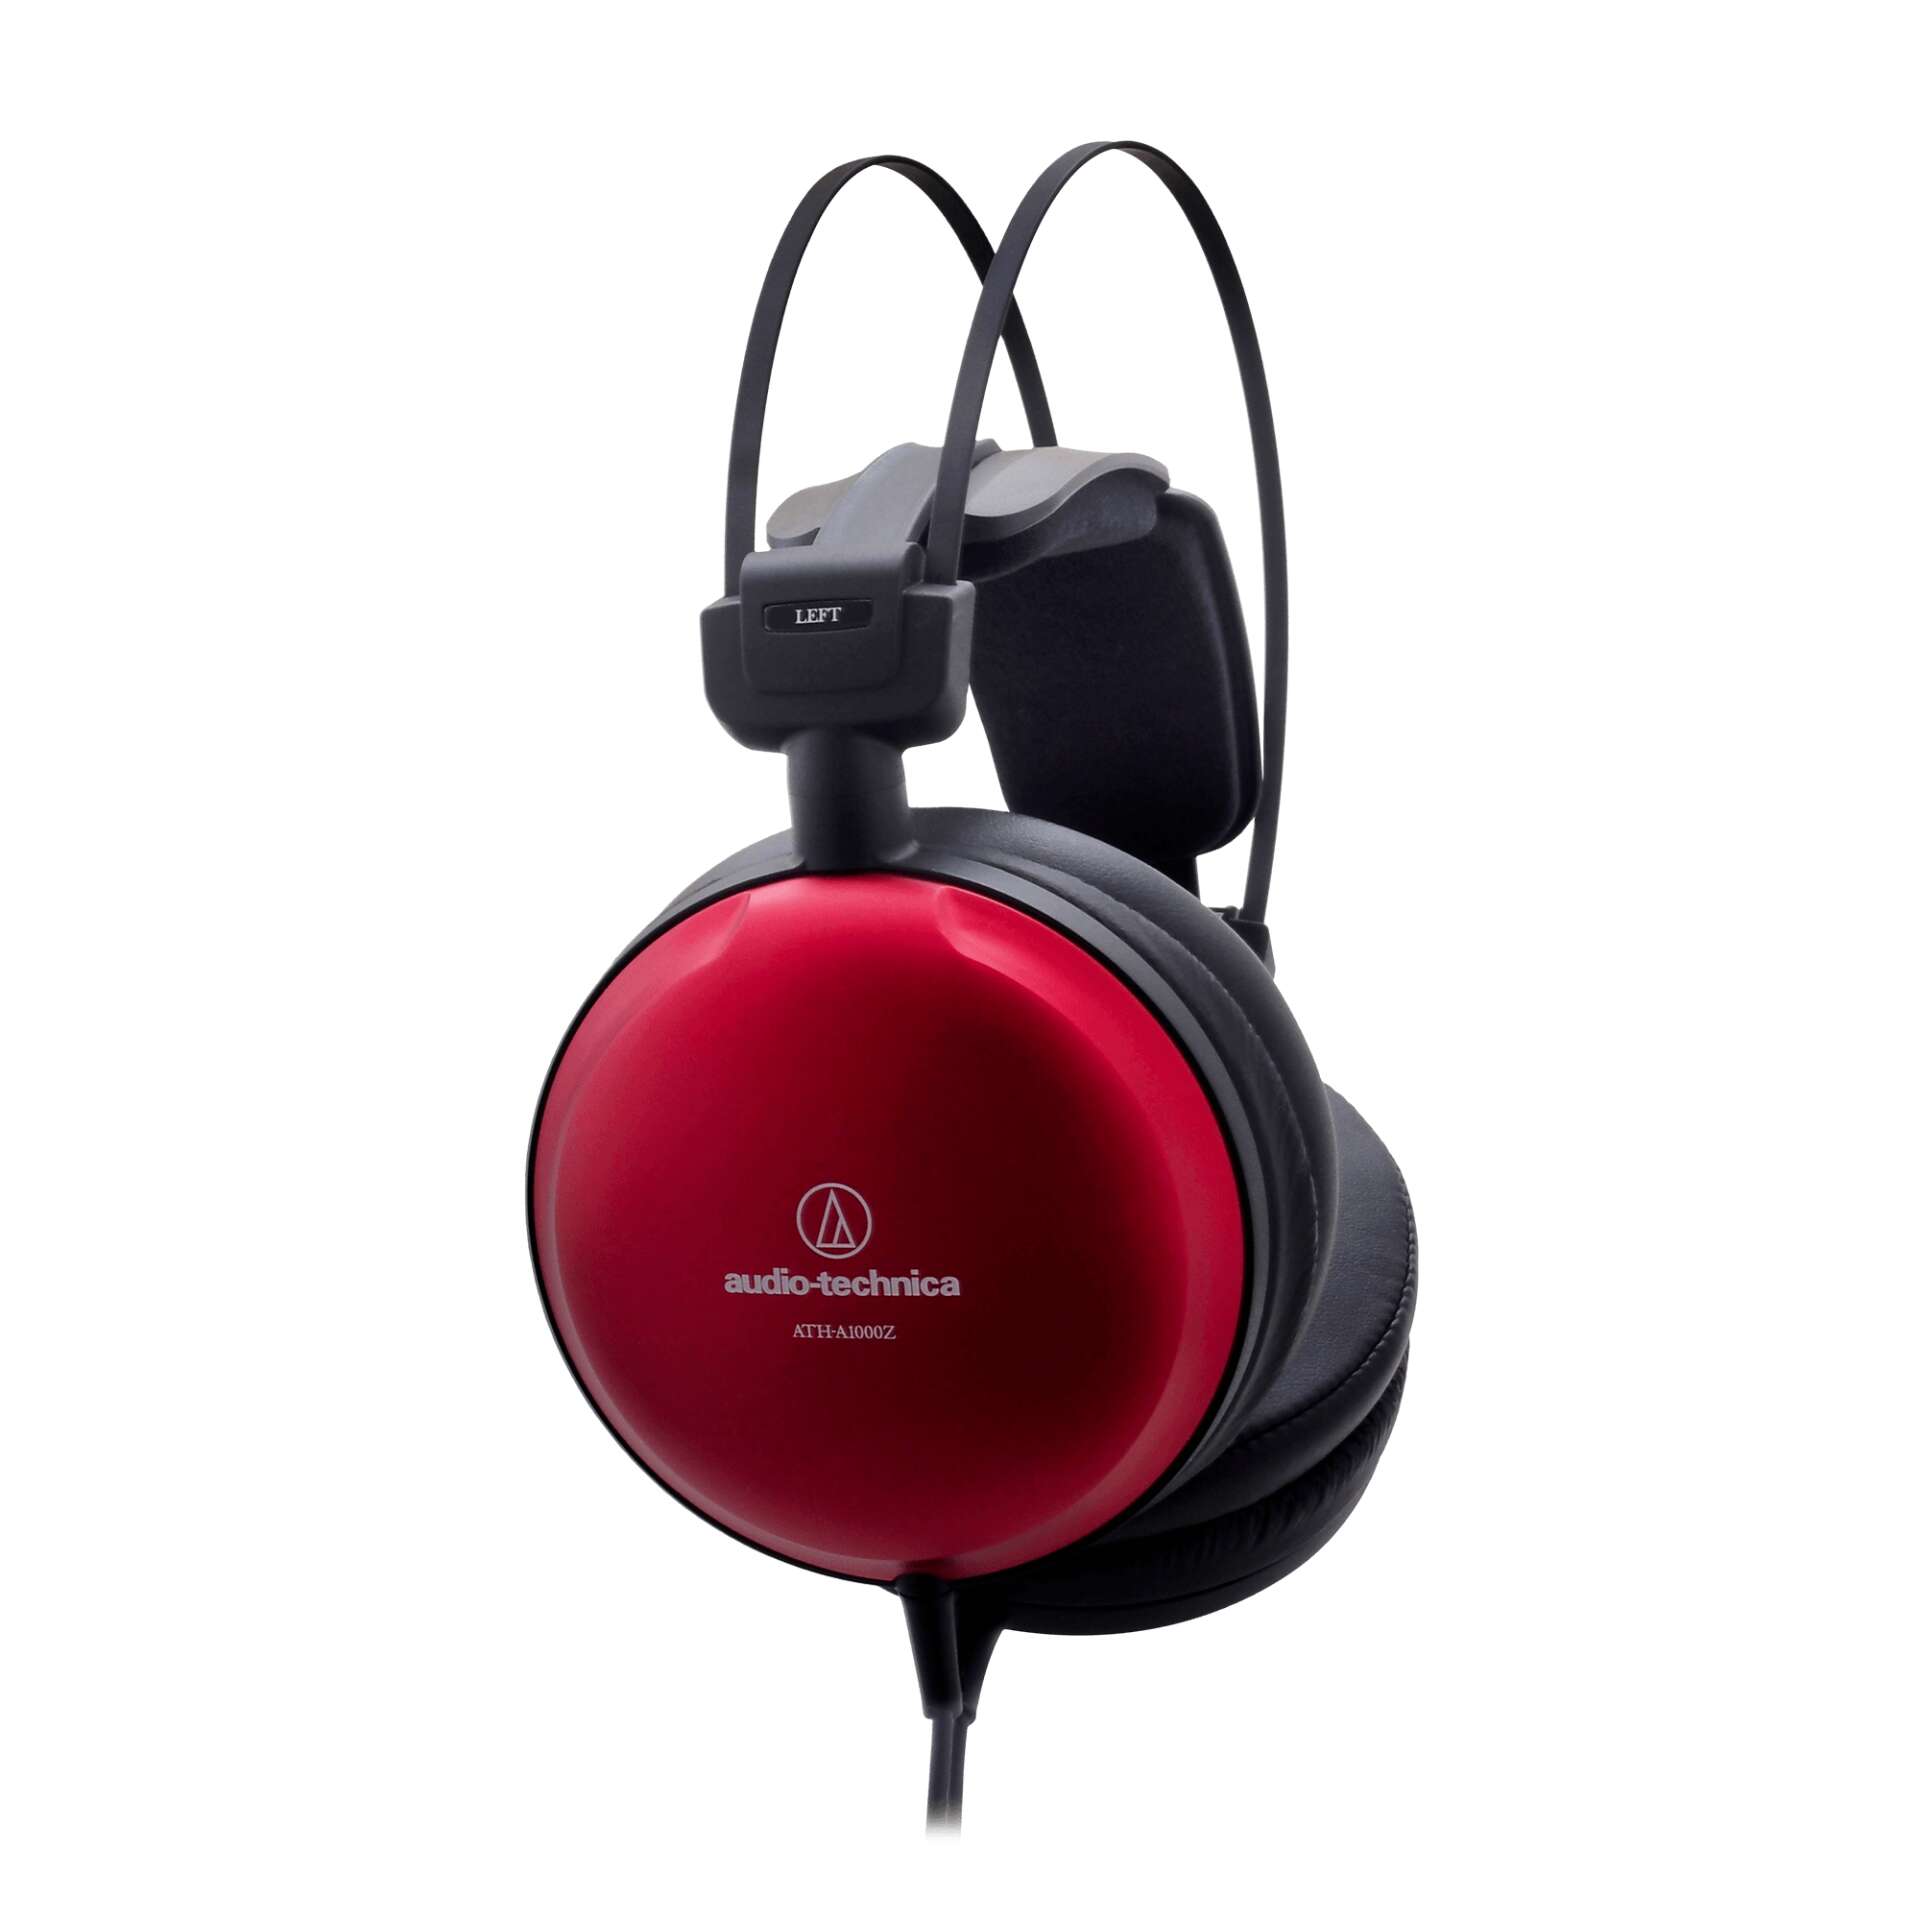 Audio-technica ath-a1000z zárt hi-fi fejhallgató fekete/piros